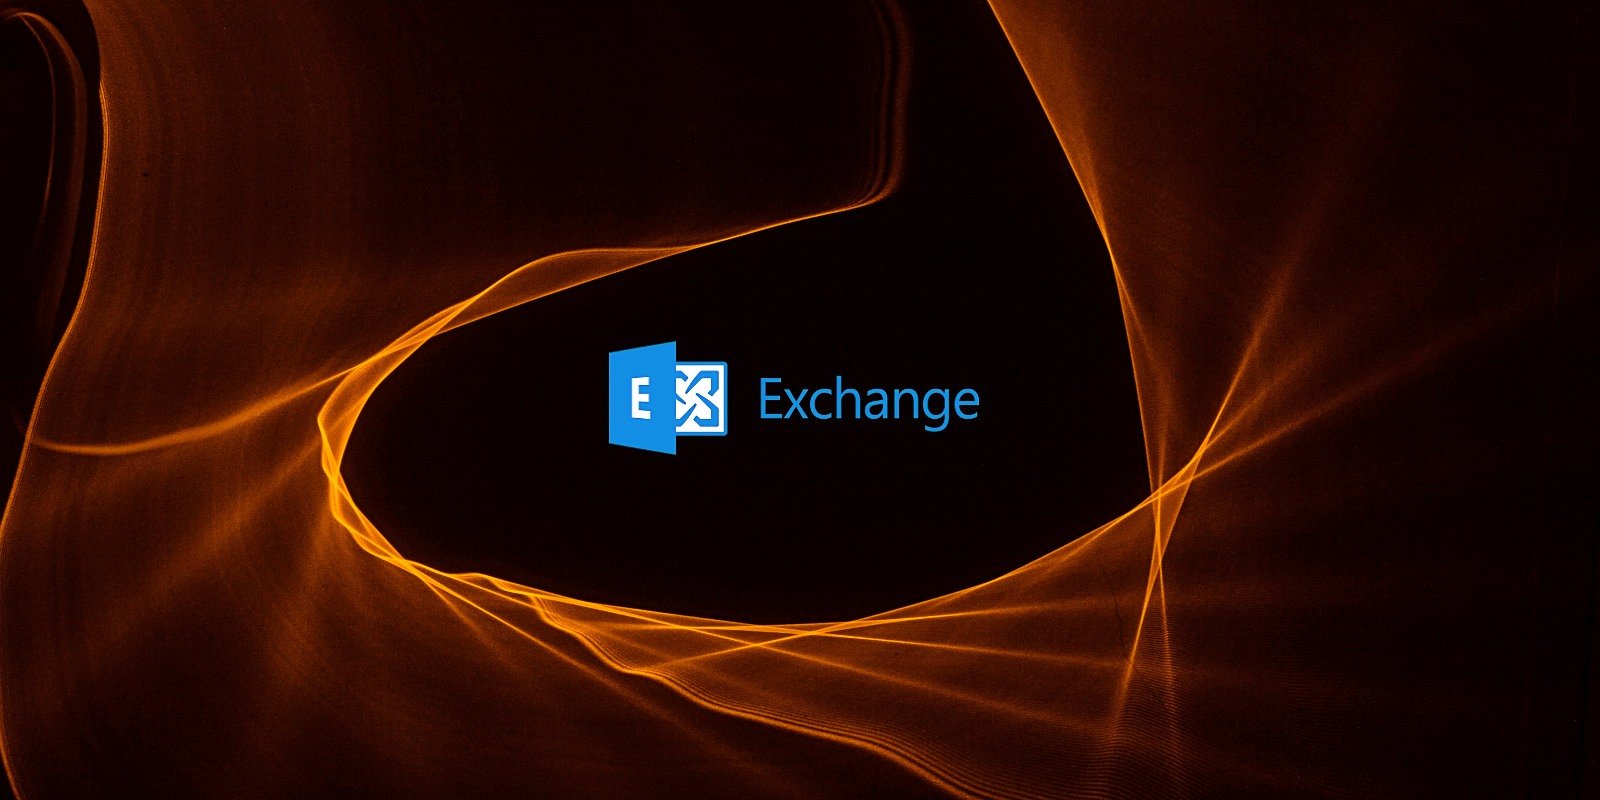 New Microsoft Exchange zero-days allow RCE, data theft attacks